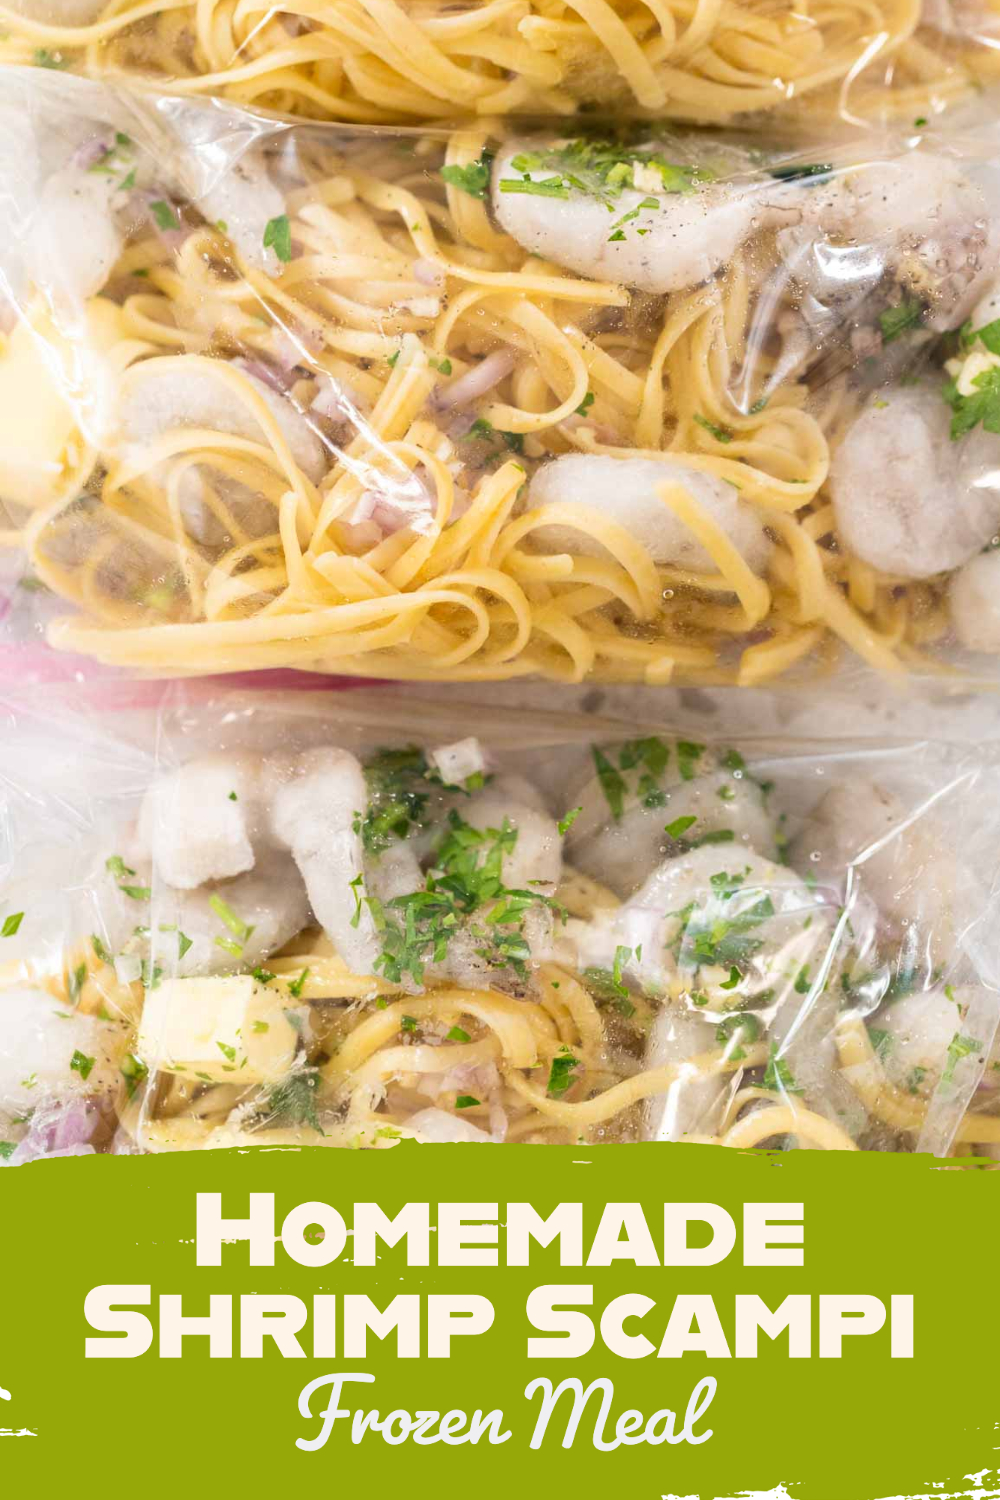 Homemade Shrimp Scampi Frozen Meal